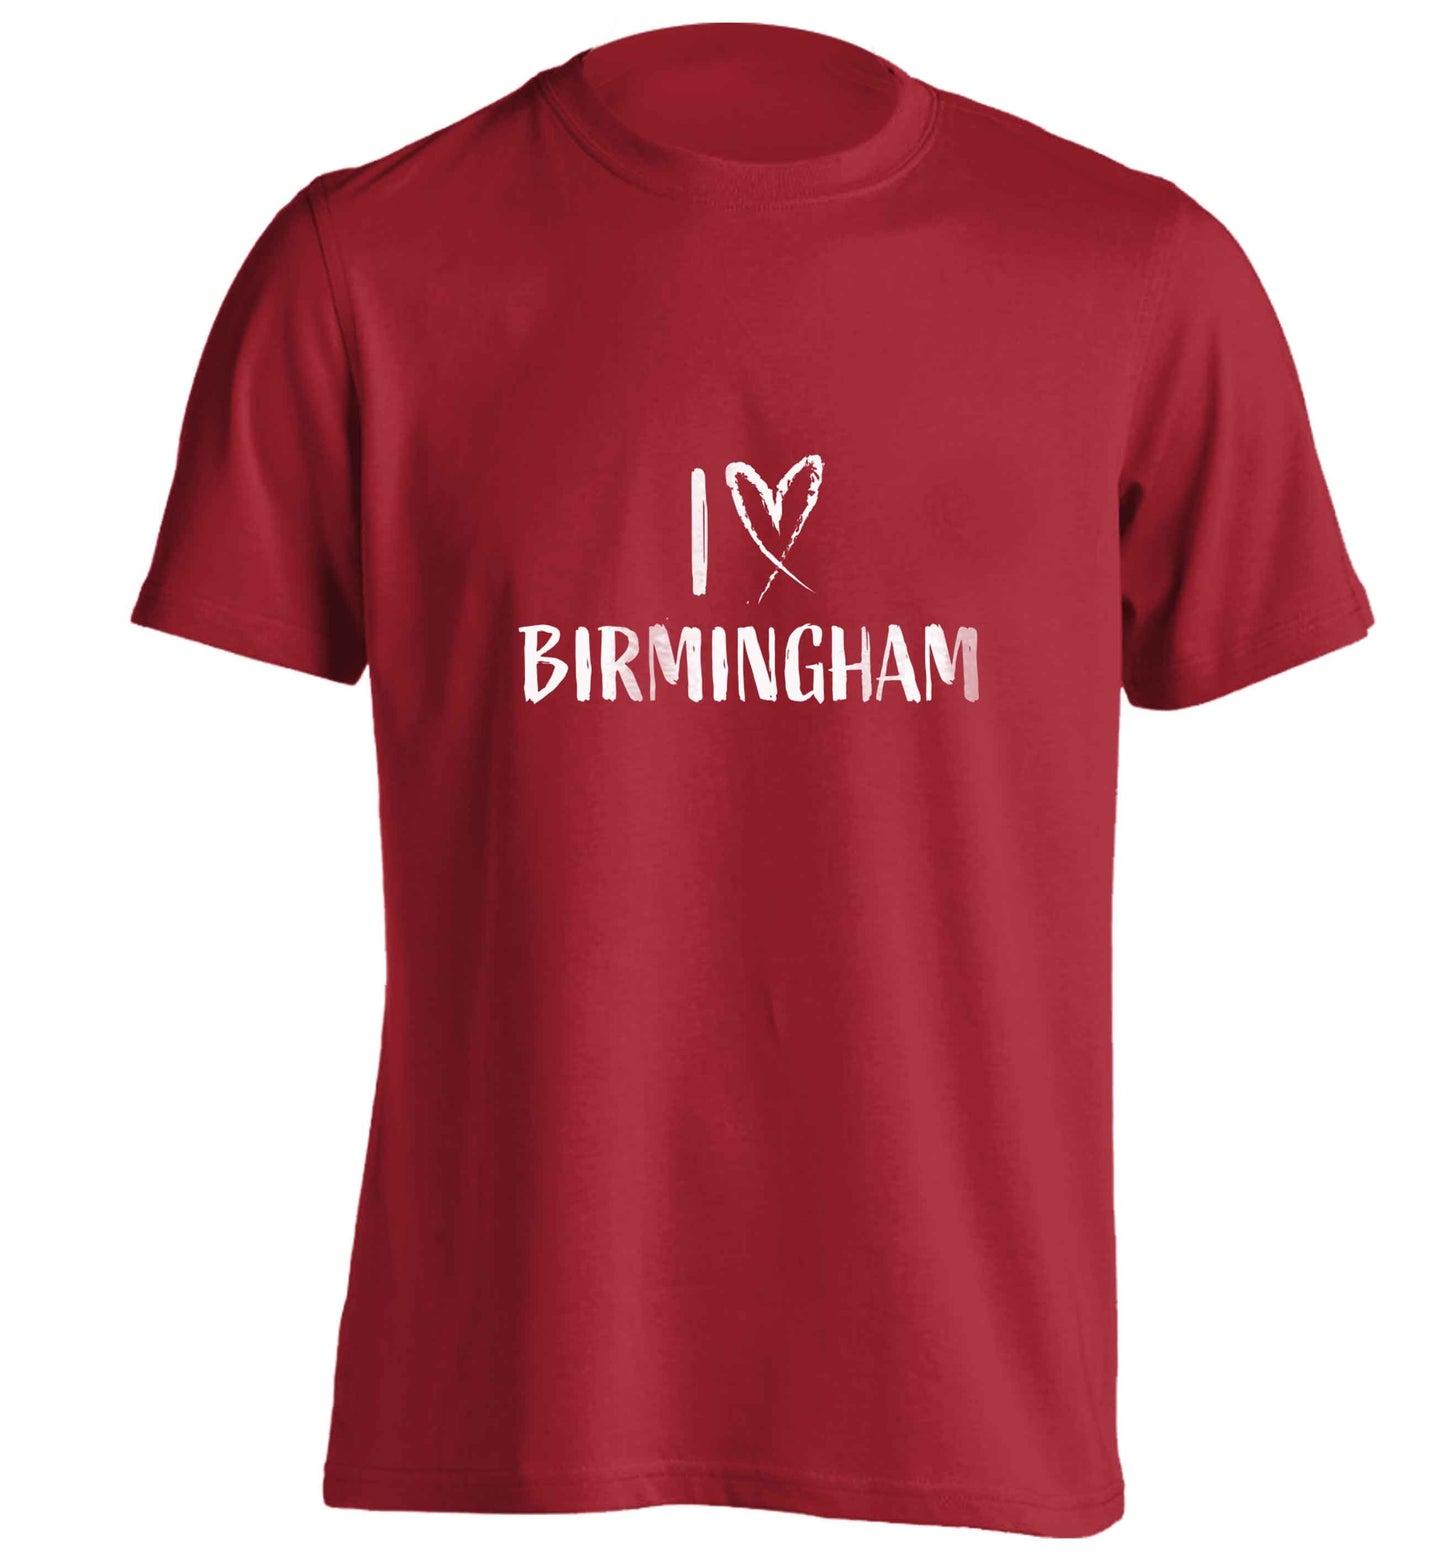 I love Birmingham adults unisex red Tshirt 2XL